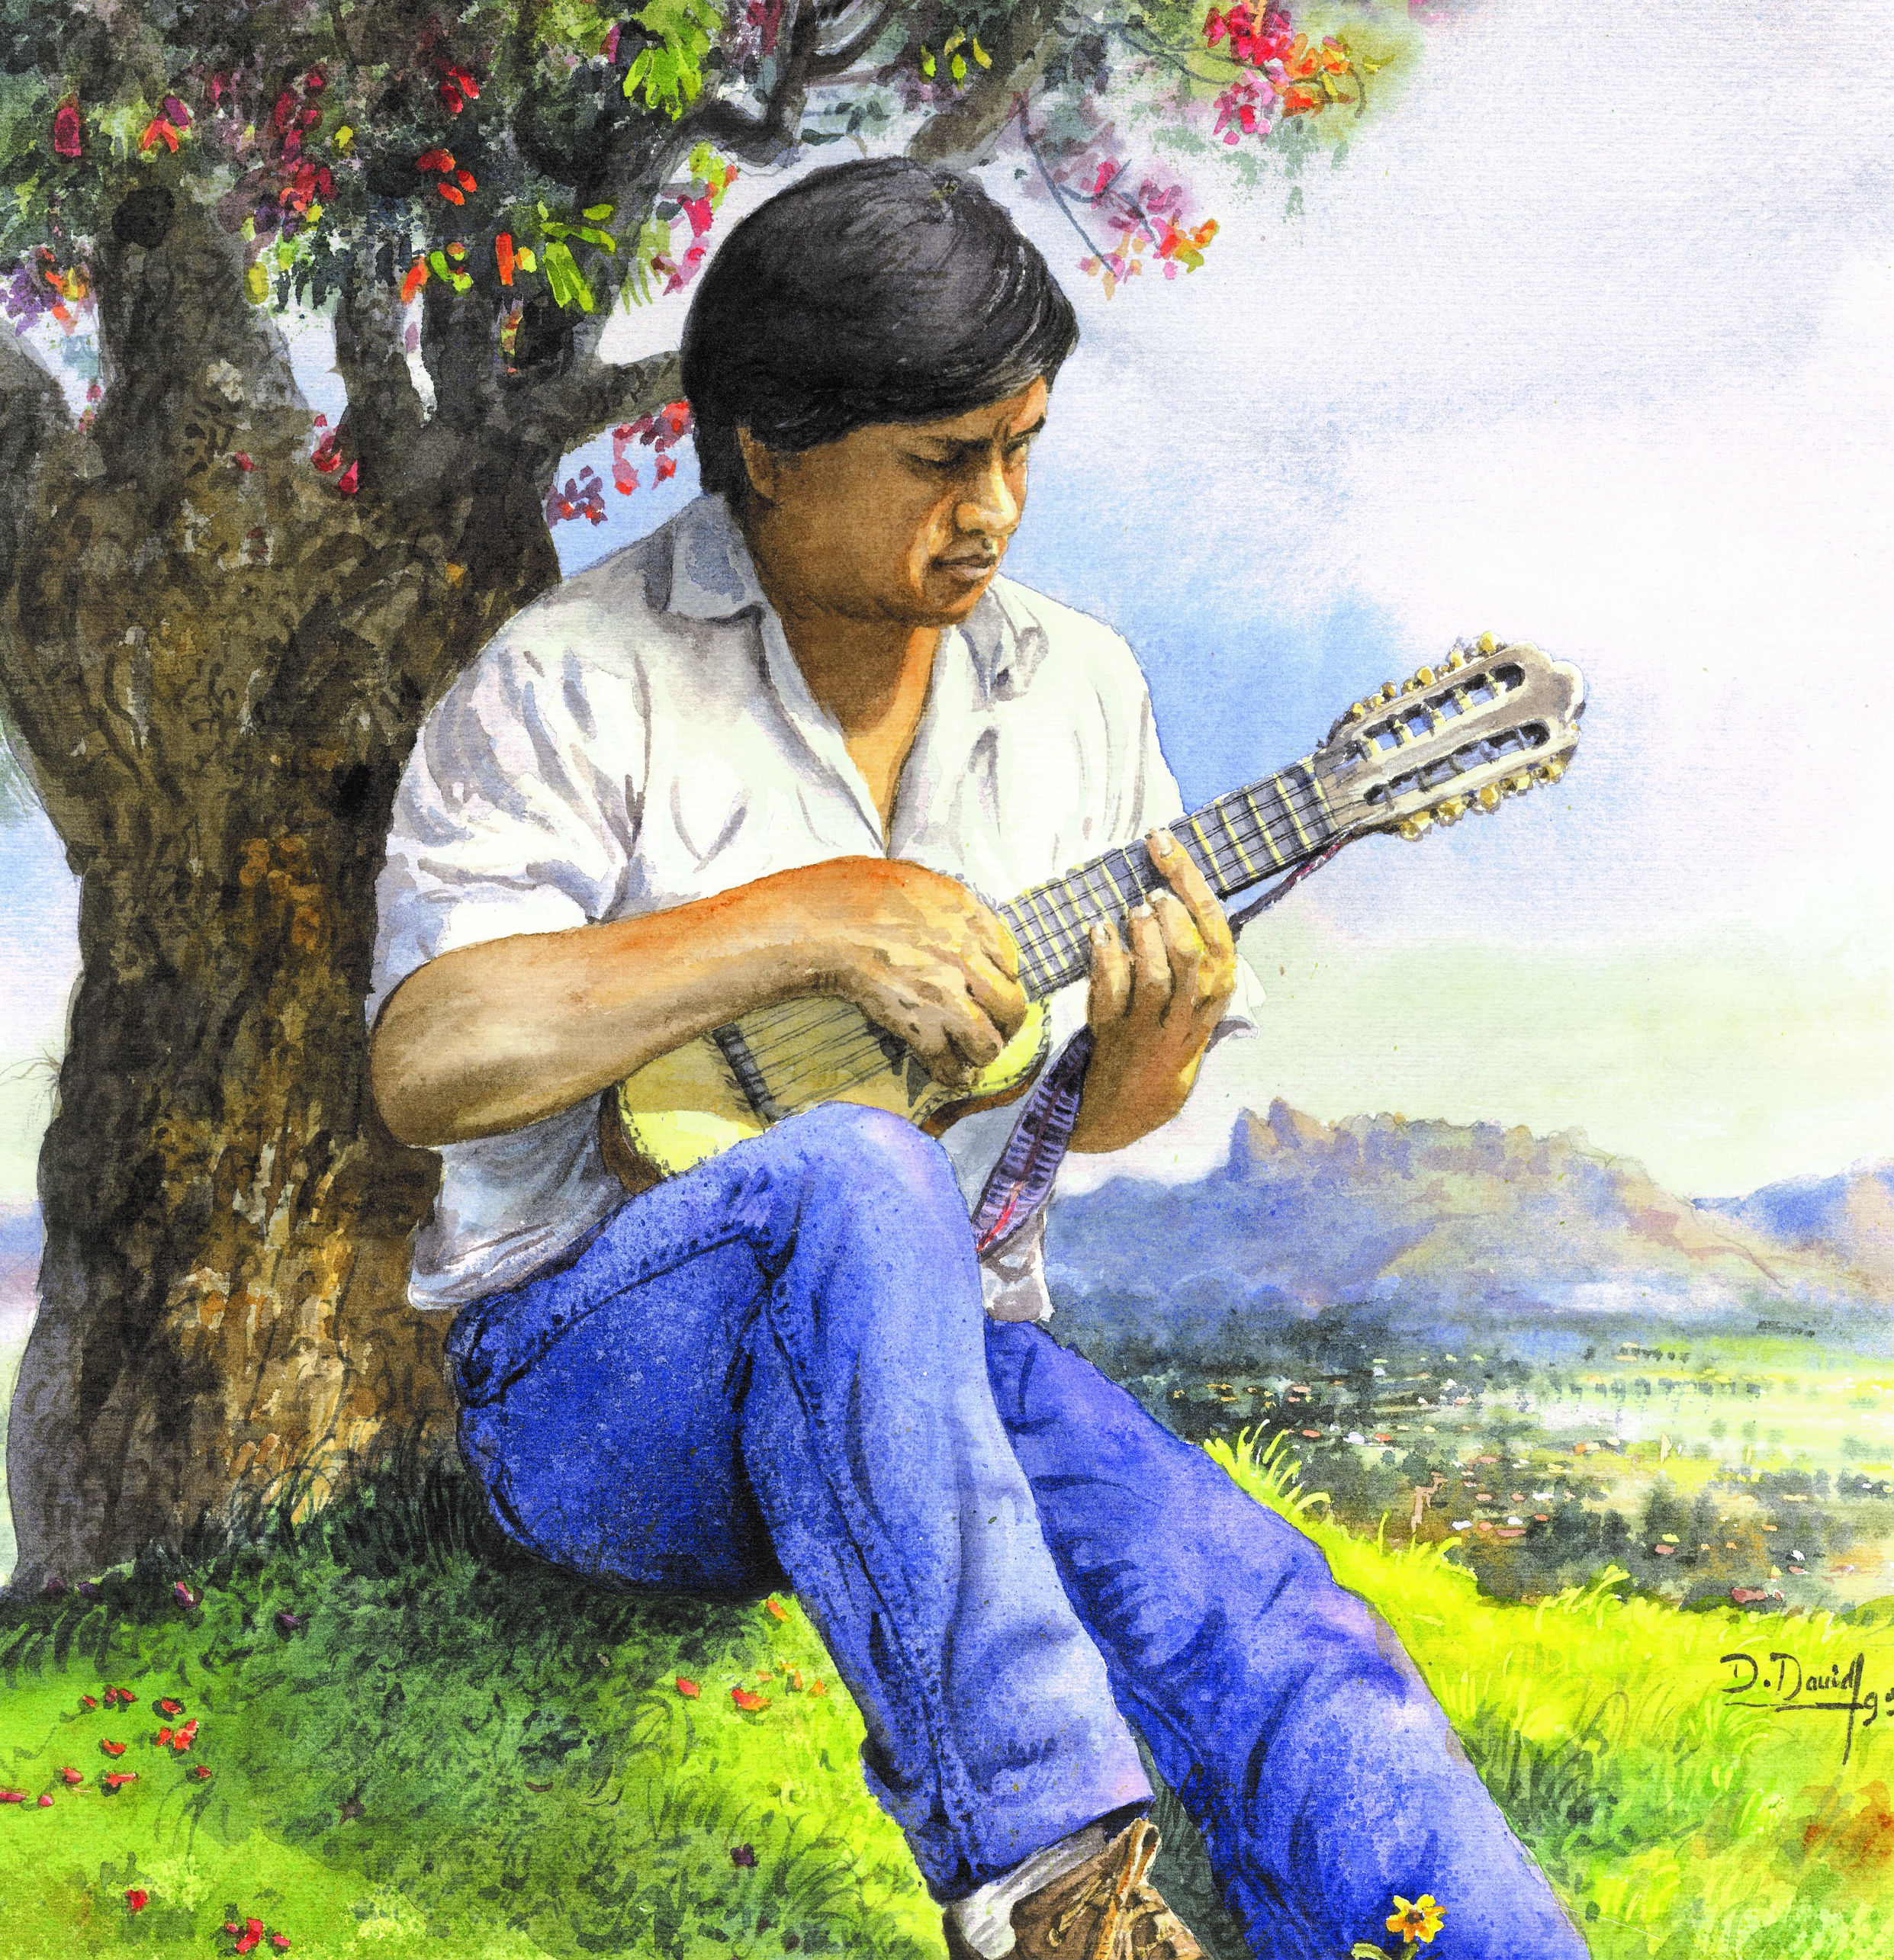 Concierto de charango de Bolivia con Alfredo Coca Antezana